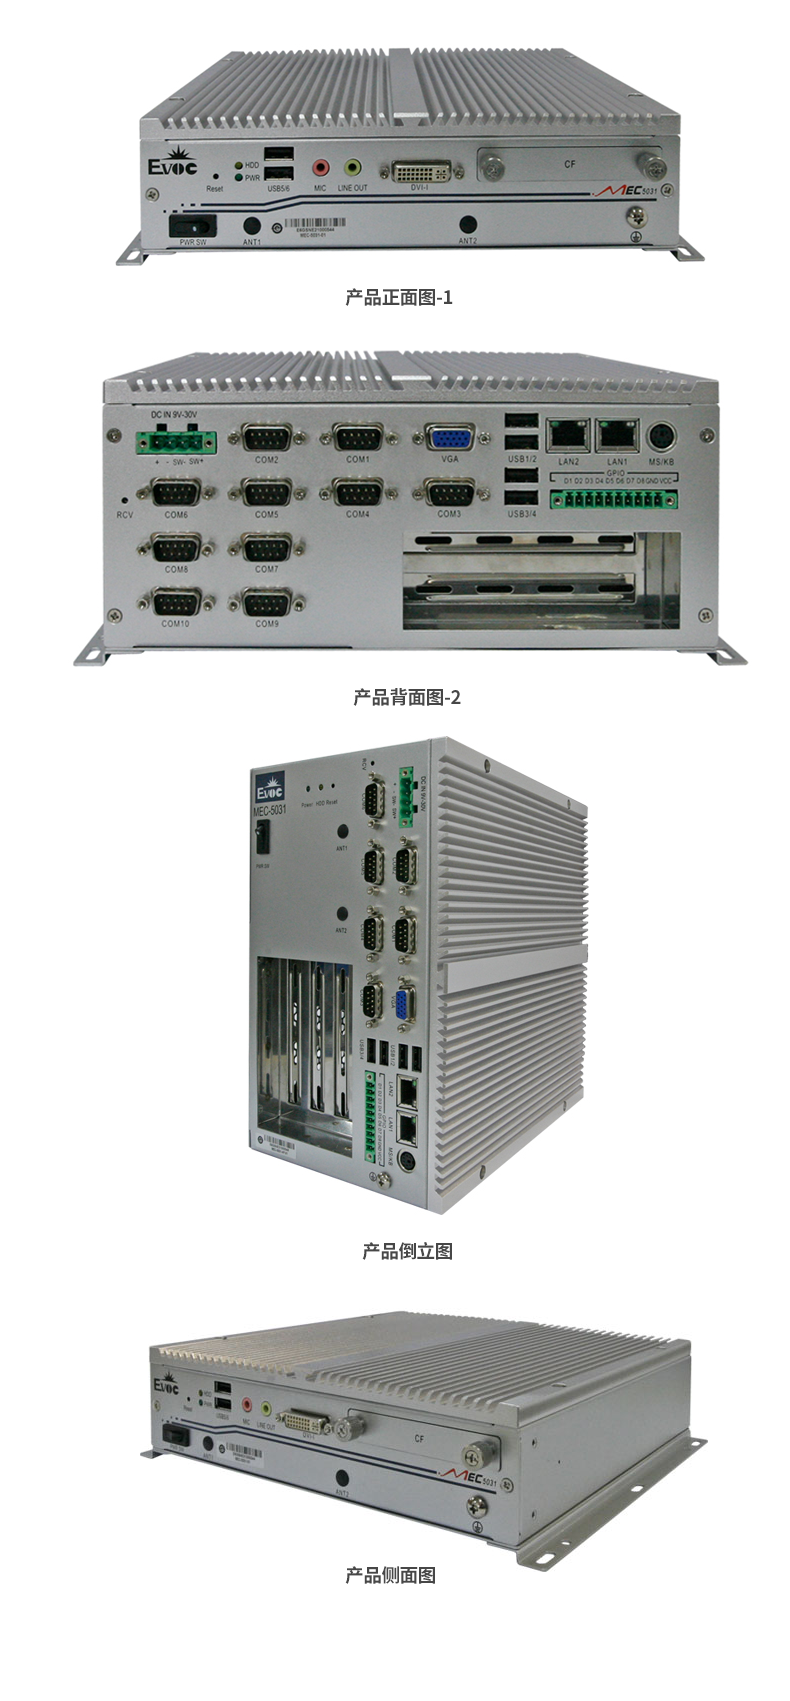 【研祥直营】MEC-5031-11/J1900/4G/500G/6 串/DVI/GPIO 支持Intel四核处理器 MEC-5031-11,MEC-5031,MEC5031,研祥,工控机